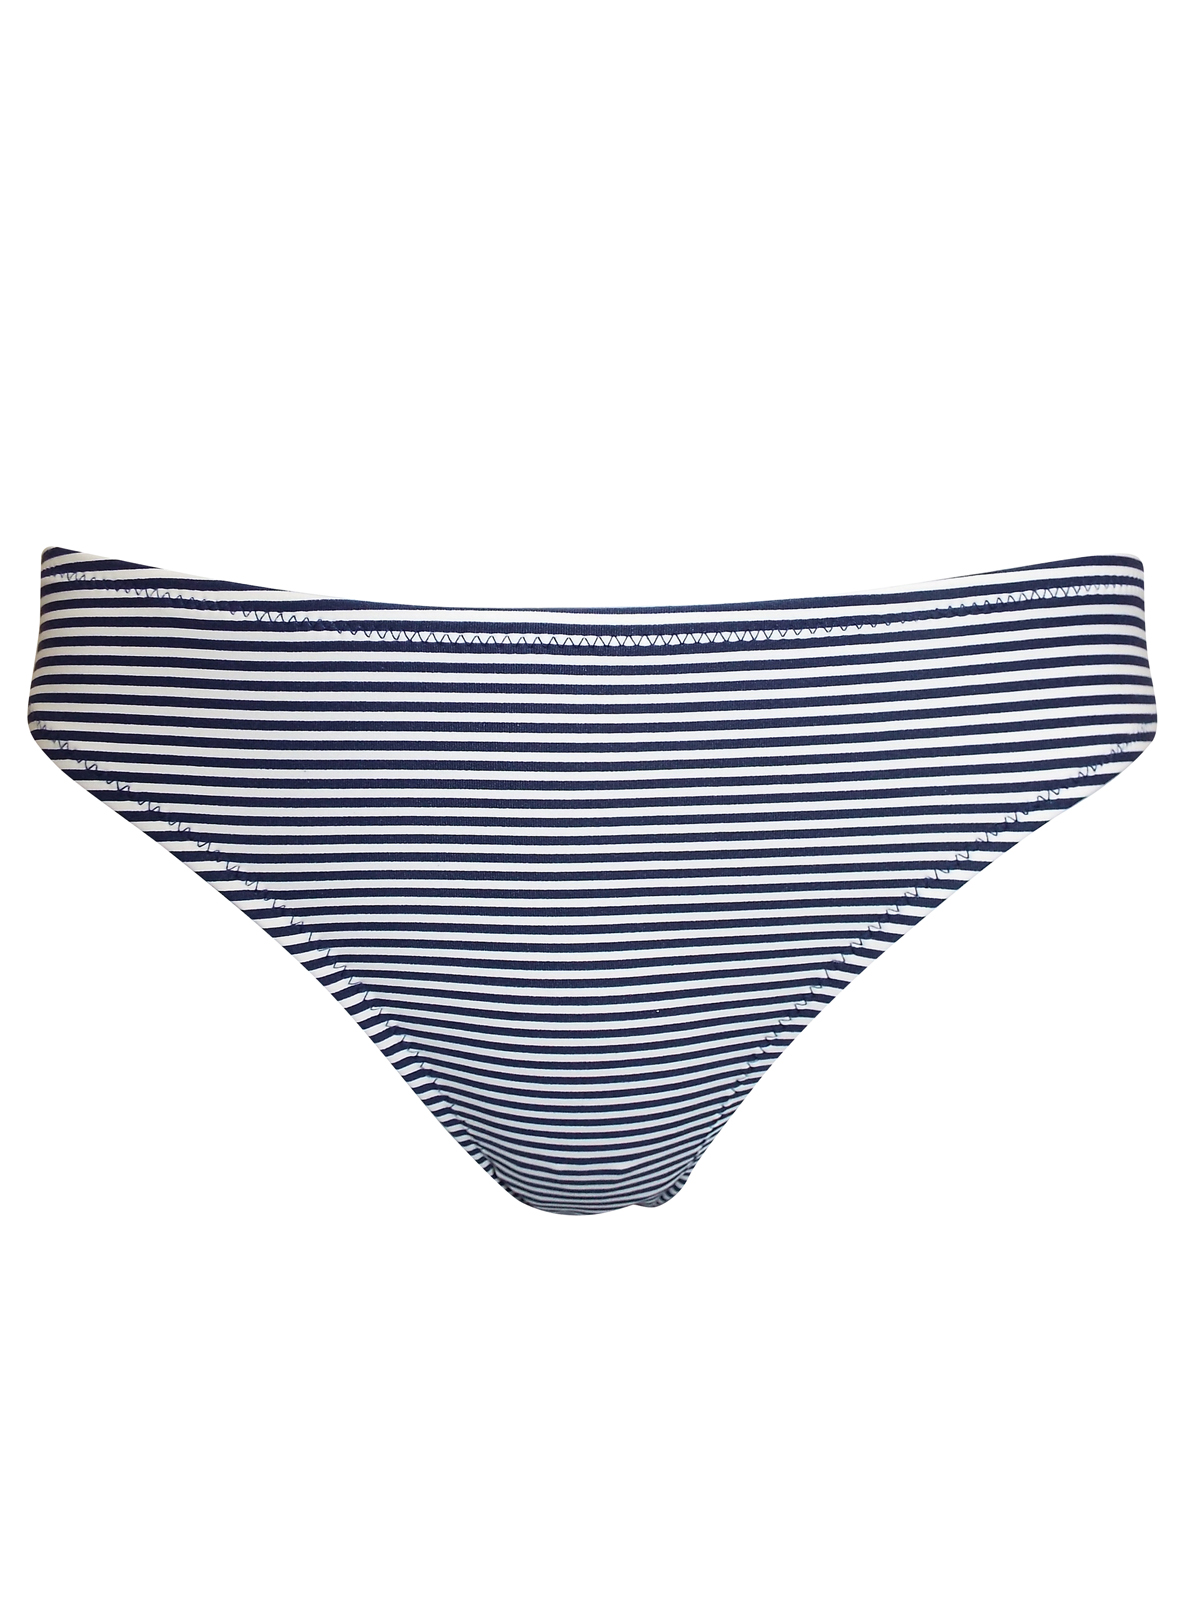 M0nsoon NAVY Striped Bikini Bottoms - Size 8 to 18